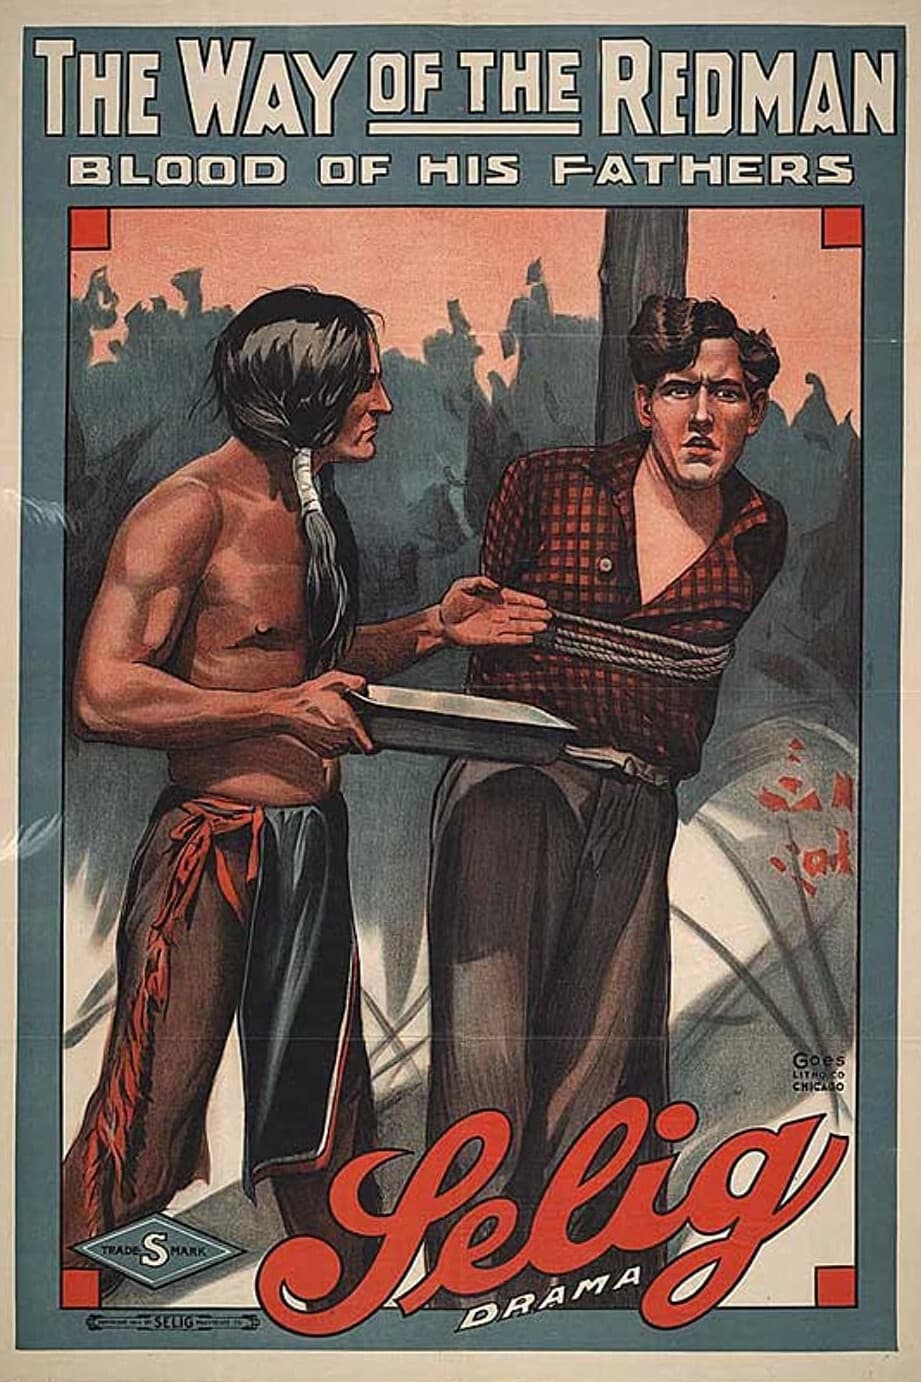 The Way of the Redman (1914) постер